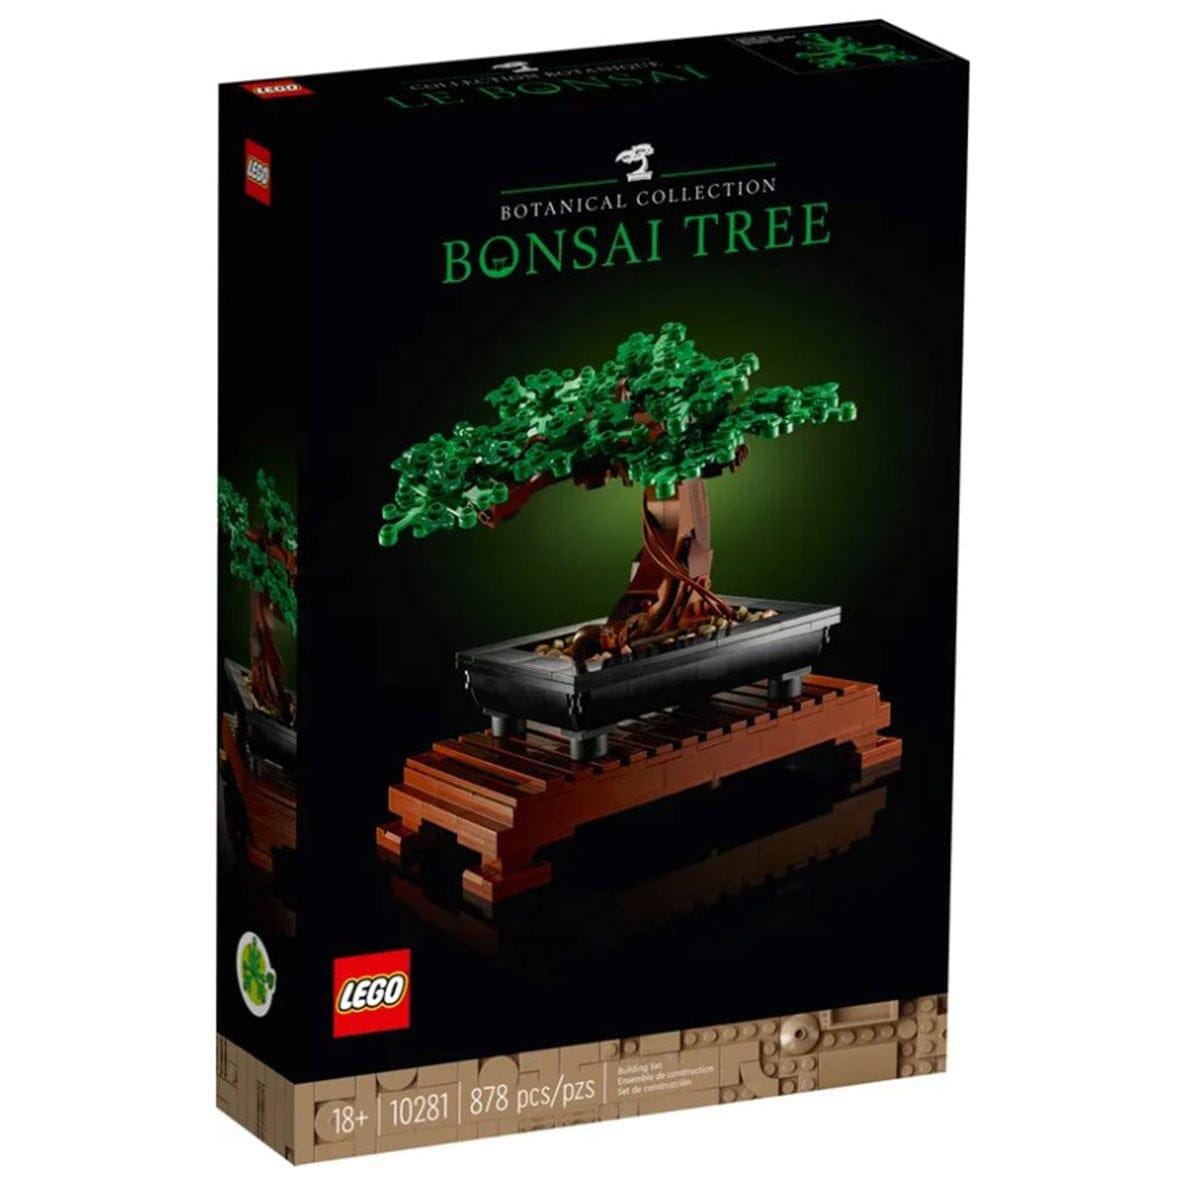 LEGO JOUET K.I.D. INC Toys & Games LEGO Creator Expert Bonsai Tree 10281, Ages 18+